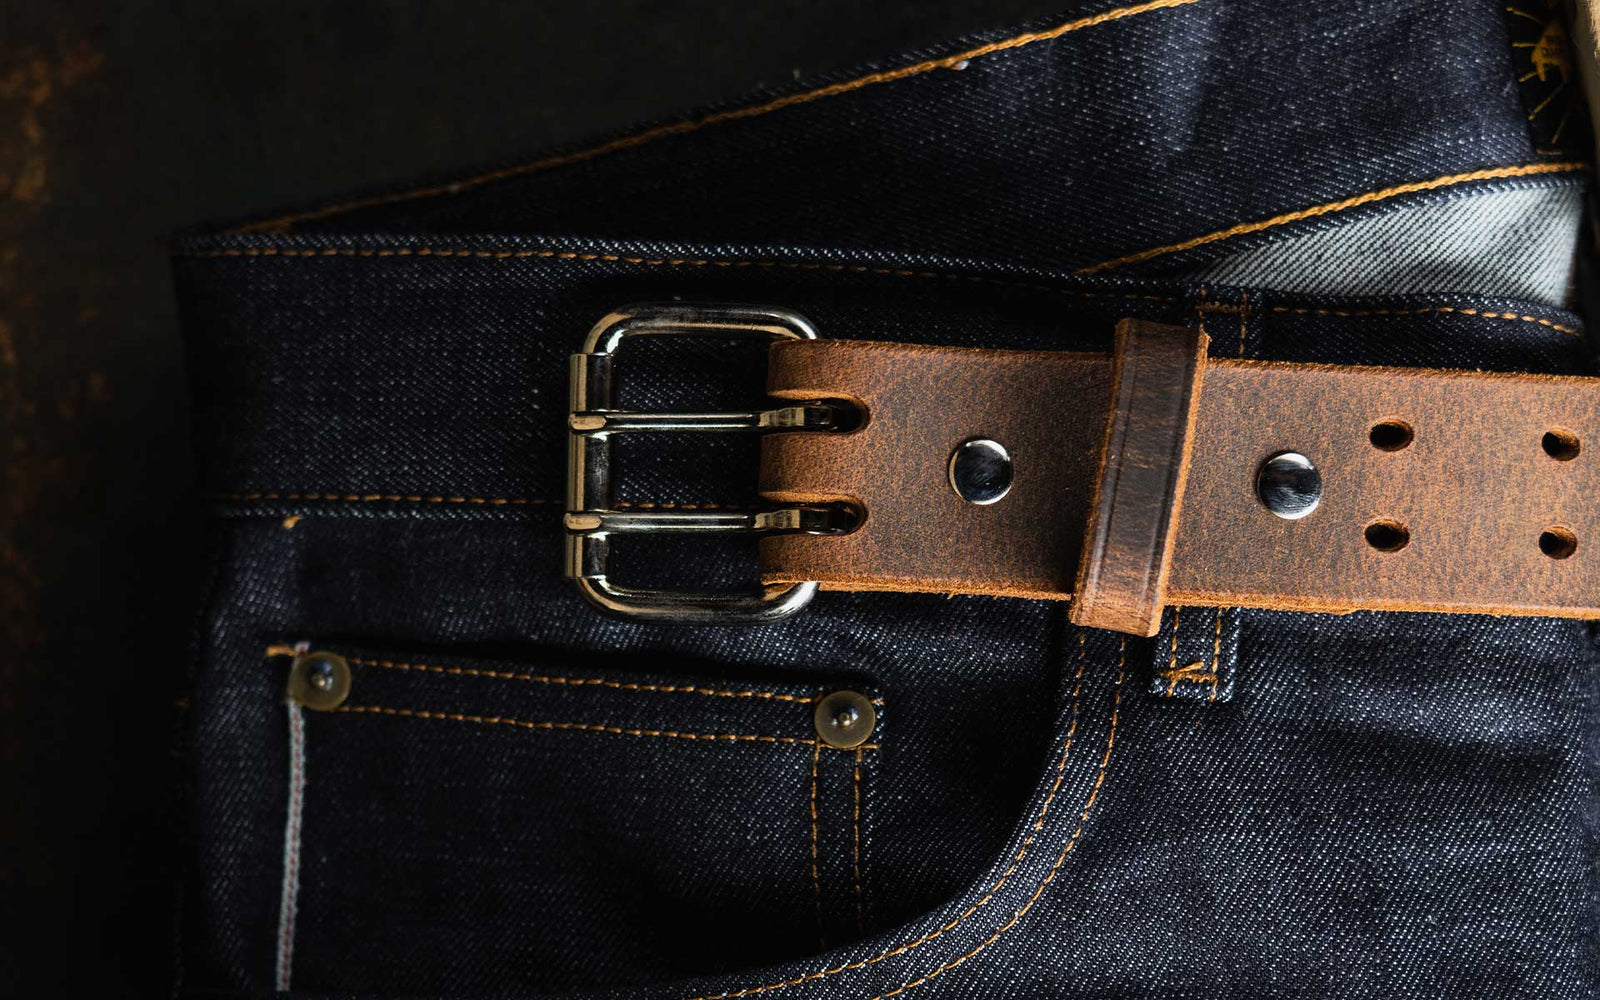 Western Belt Distressed Leather Belts Vintage Mens Women's Worn Rustic  Rugged Black Brown Strap -  Canada